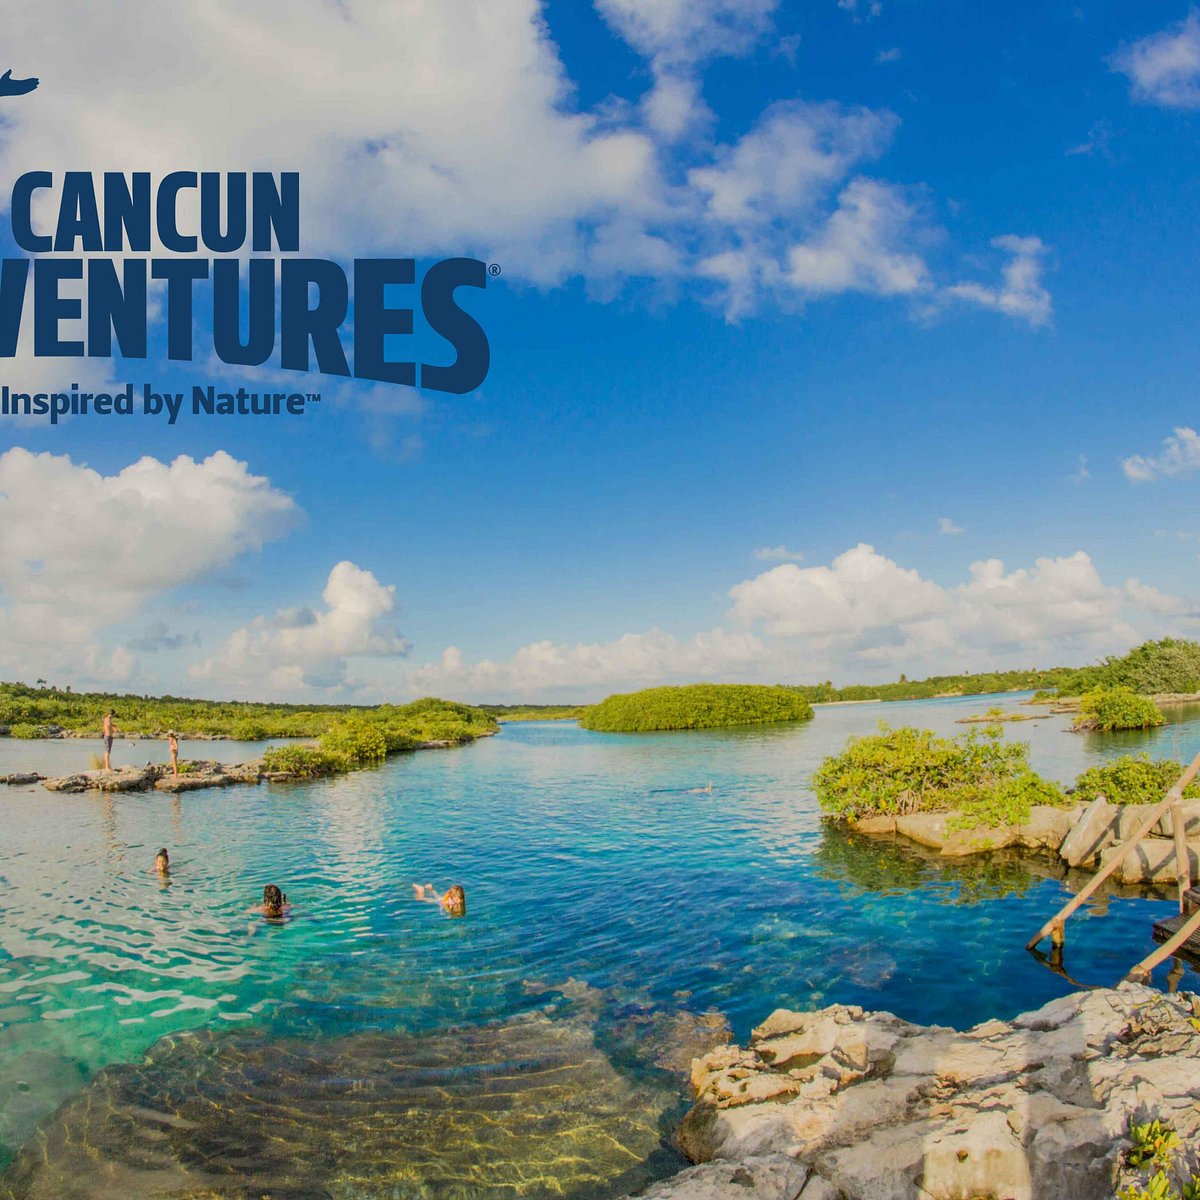 cancun adventure tours